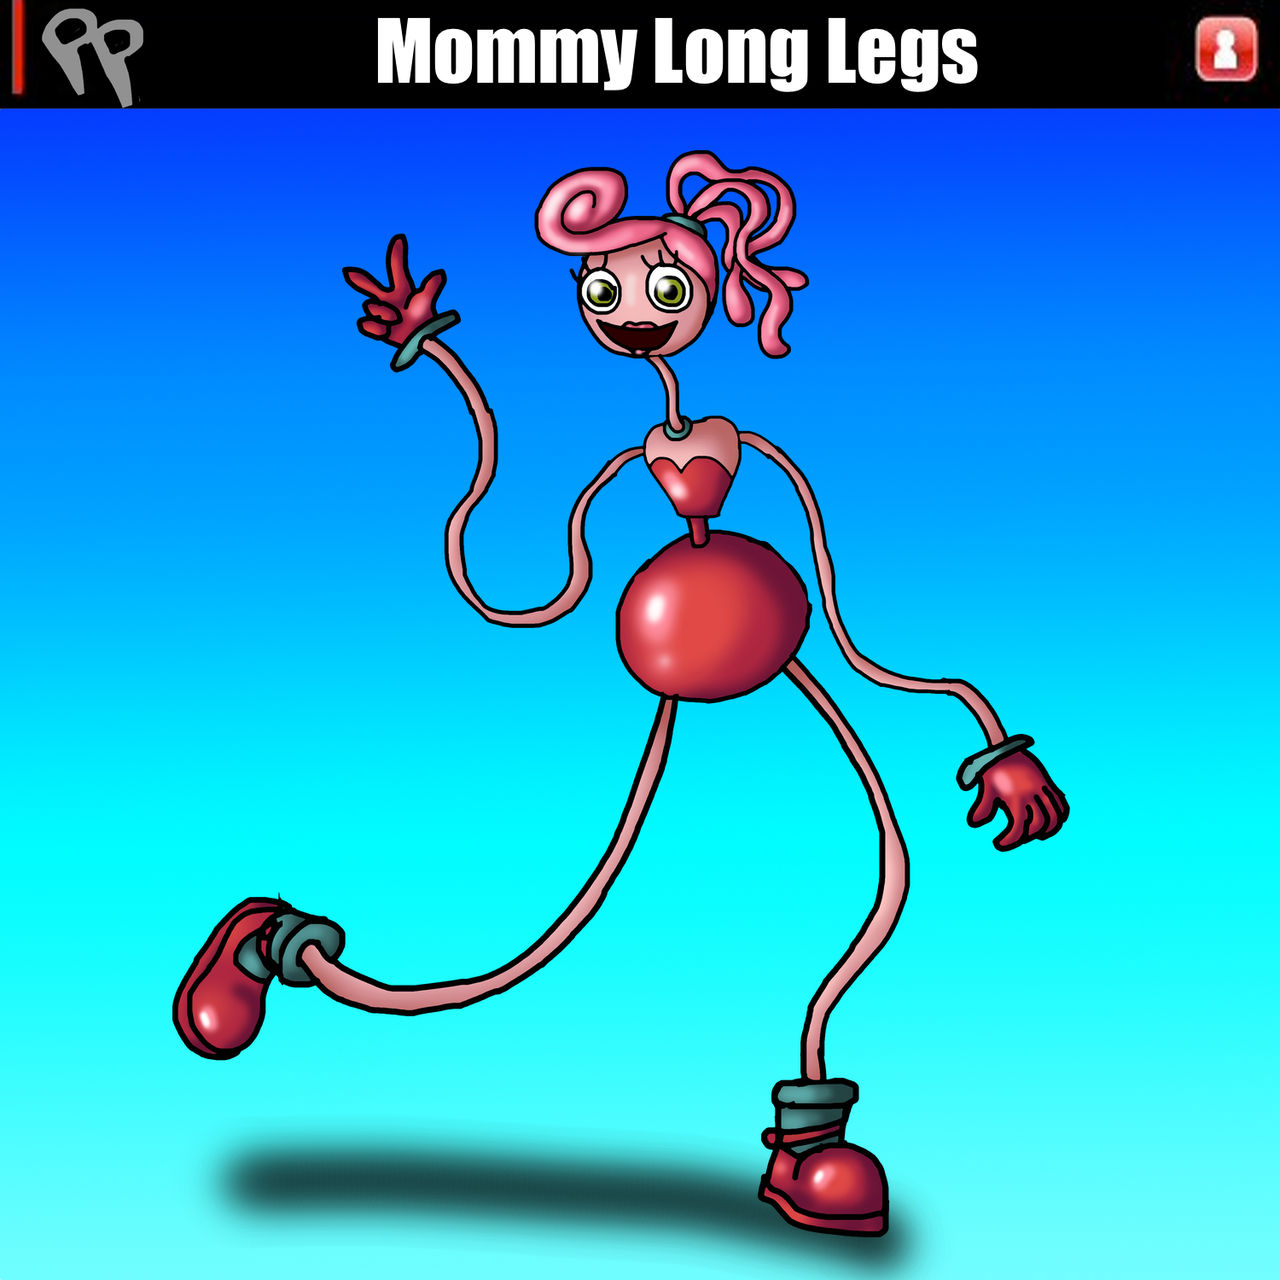 Mommy Long Legs Render by smashPUG64 on DeviantArt